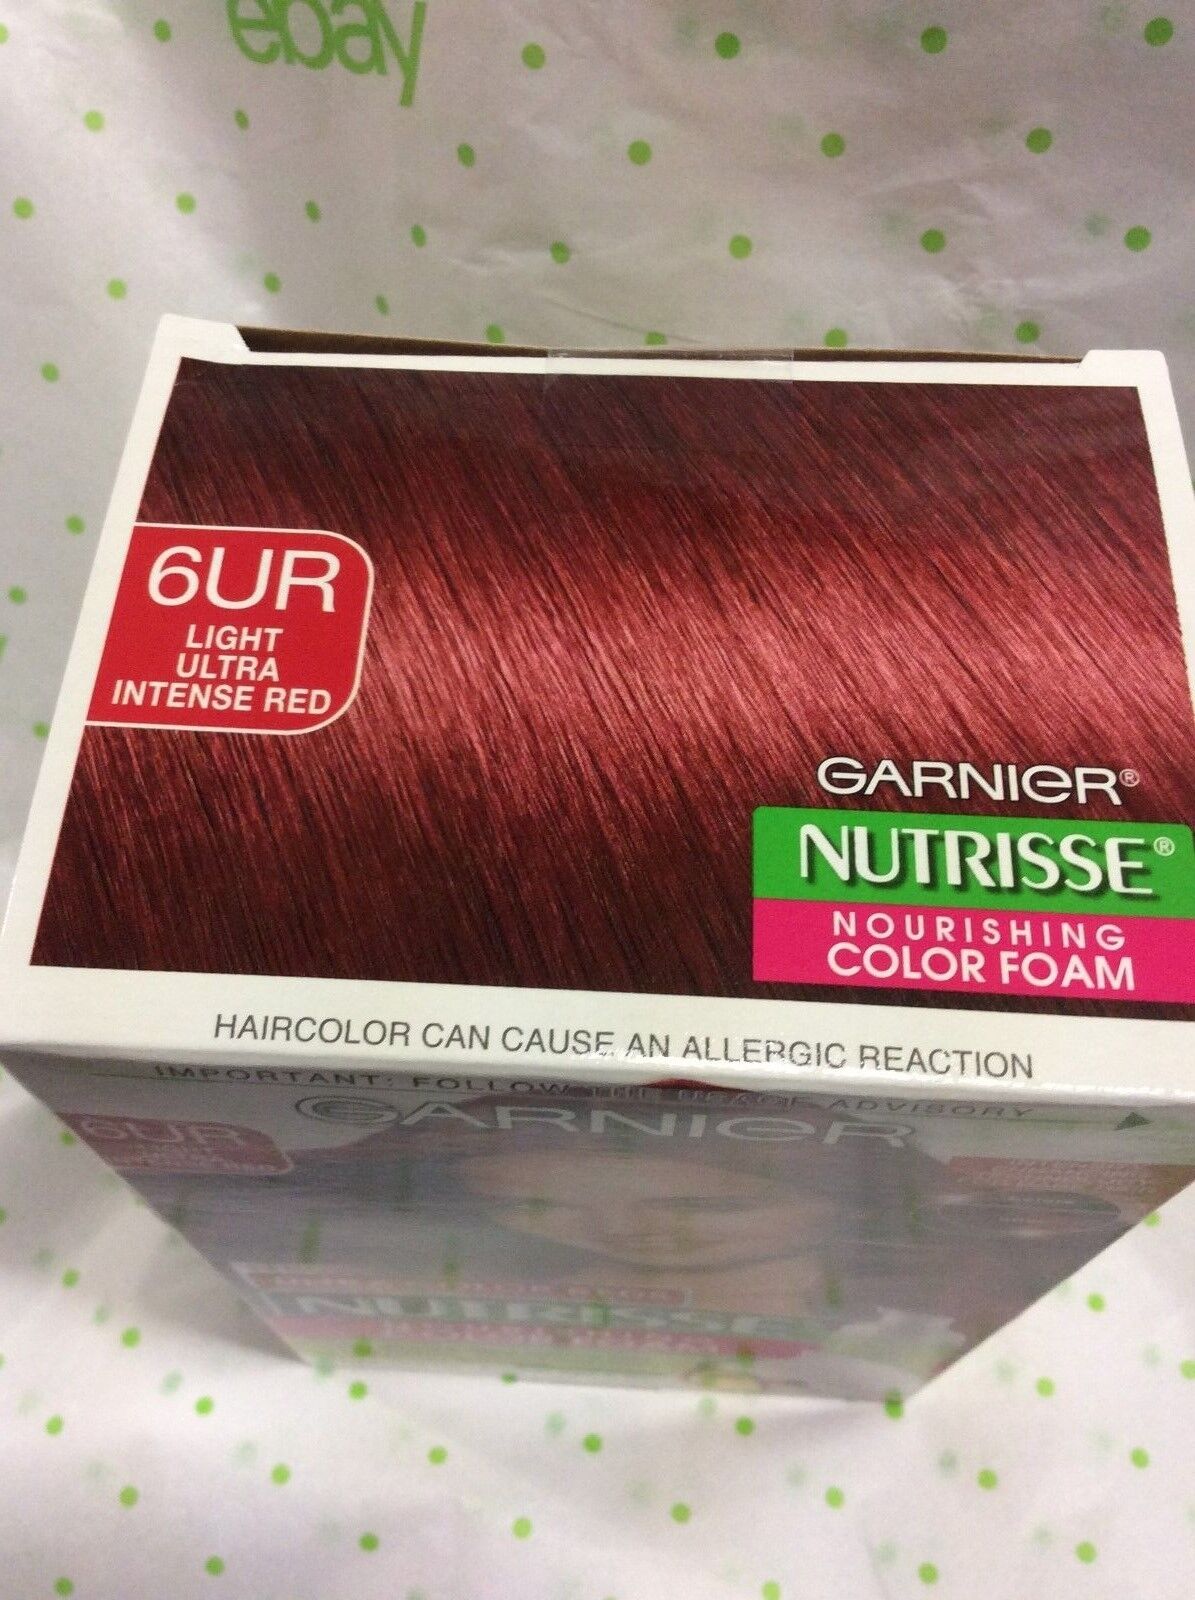 Garnier Nutrisse Nourishing Color Foam #6Ur Light Ultra Intense Red Hair  Color